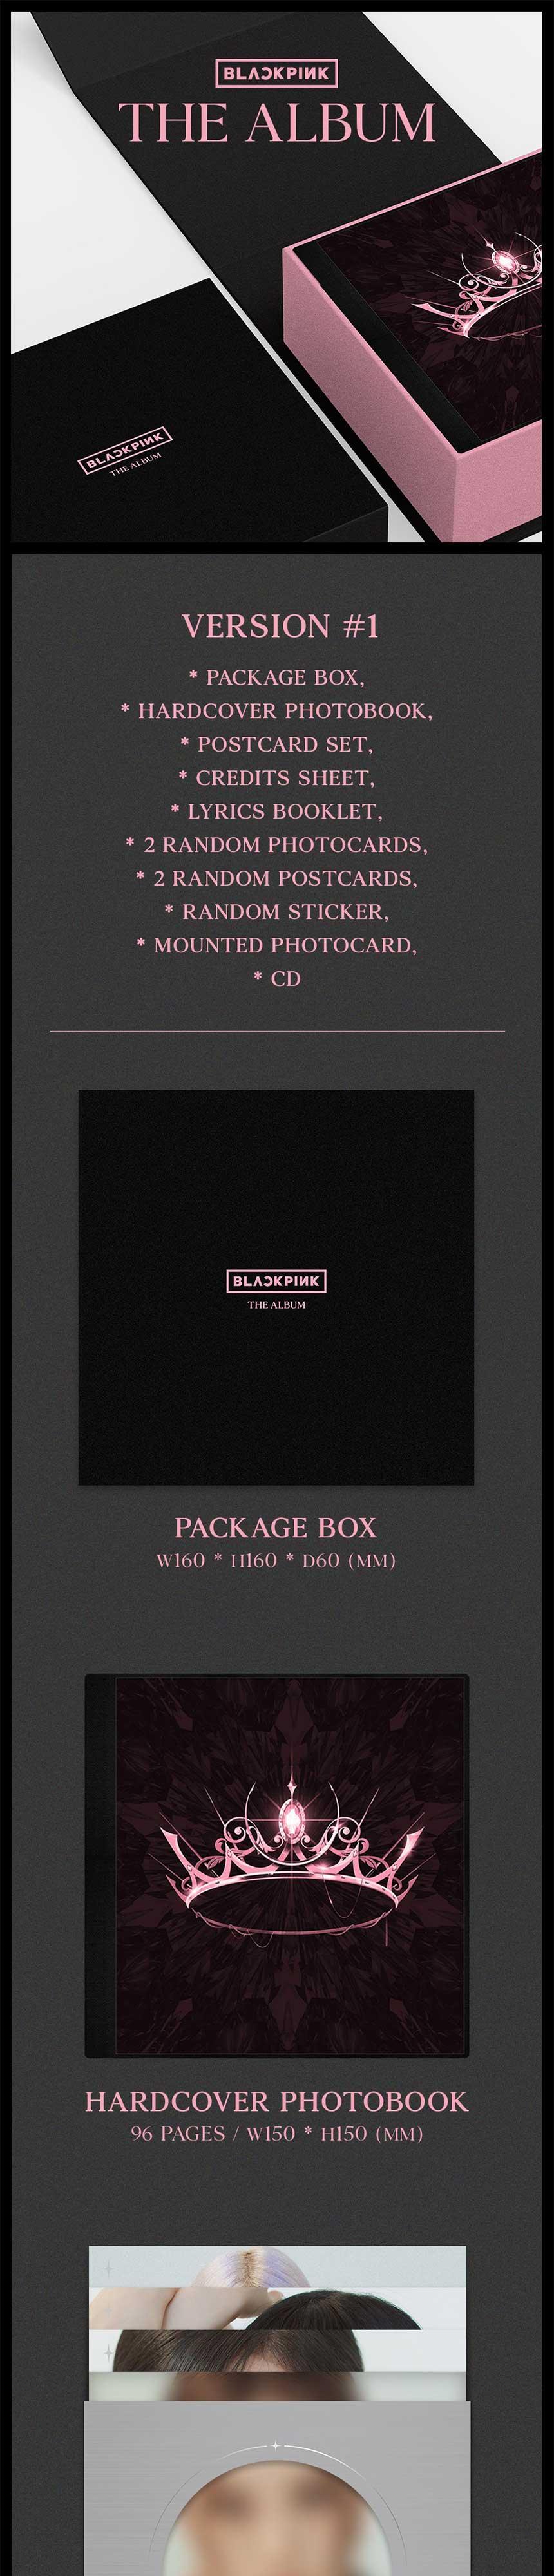 BLACKPINK 1st Full ALBUM 'Black Pink' [Random] - Shopping Around the World with Goodsnjoy